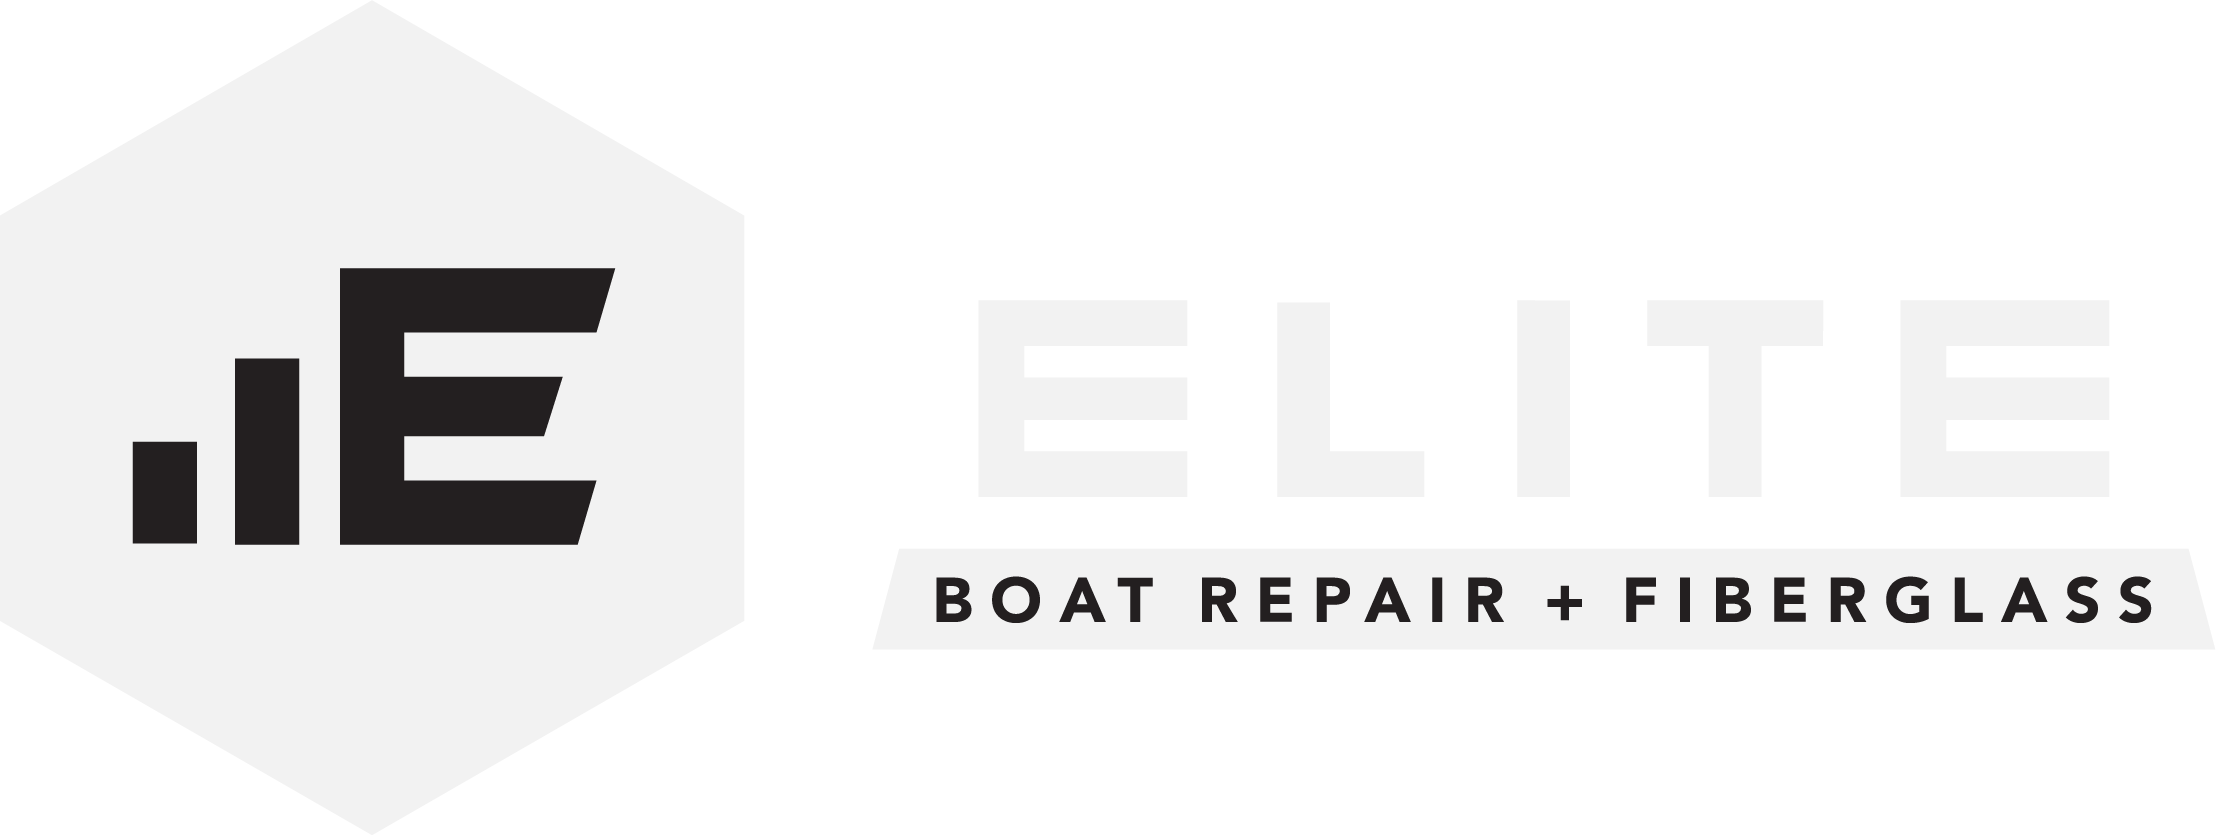 Elite RV Pros logo - Dallas-Fort Worth RV Repair Services